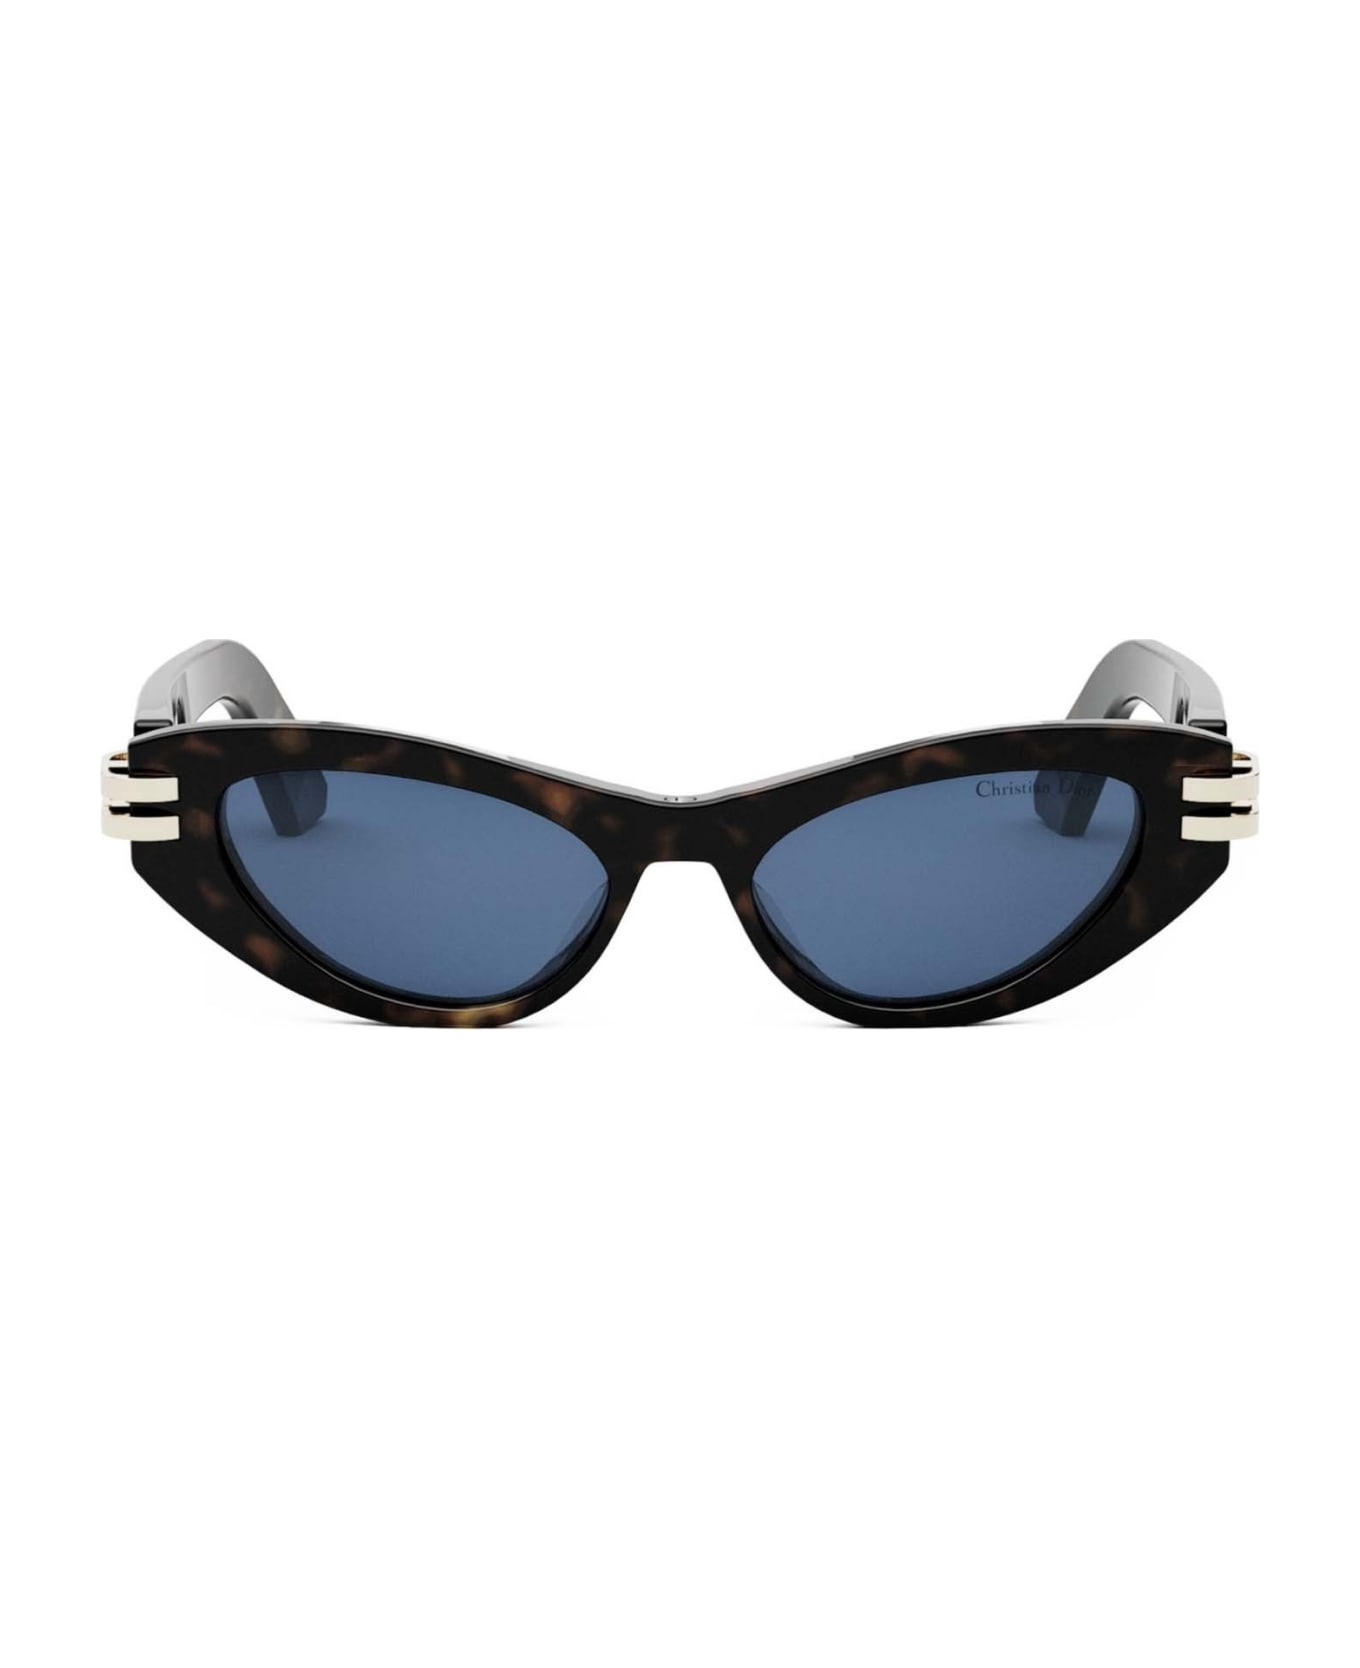 Dior Eyewear Sunglasses - Havana/Blu